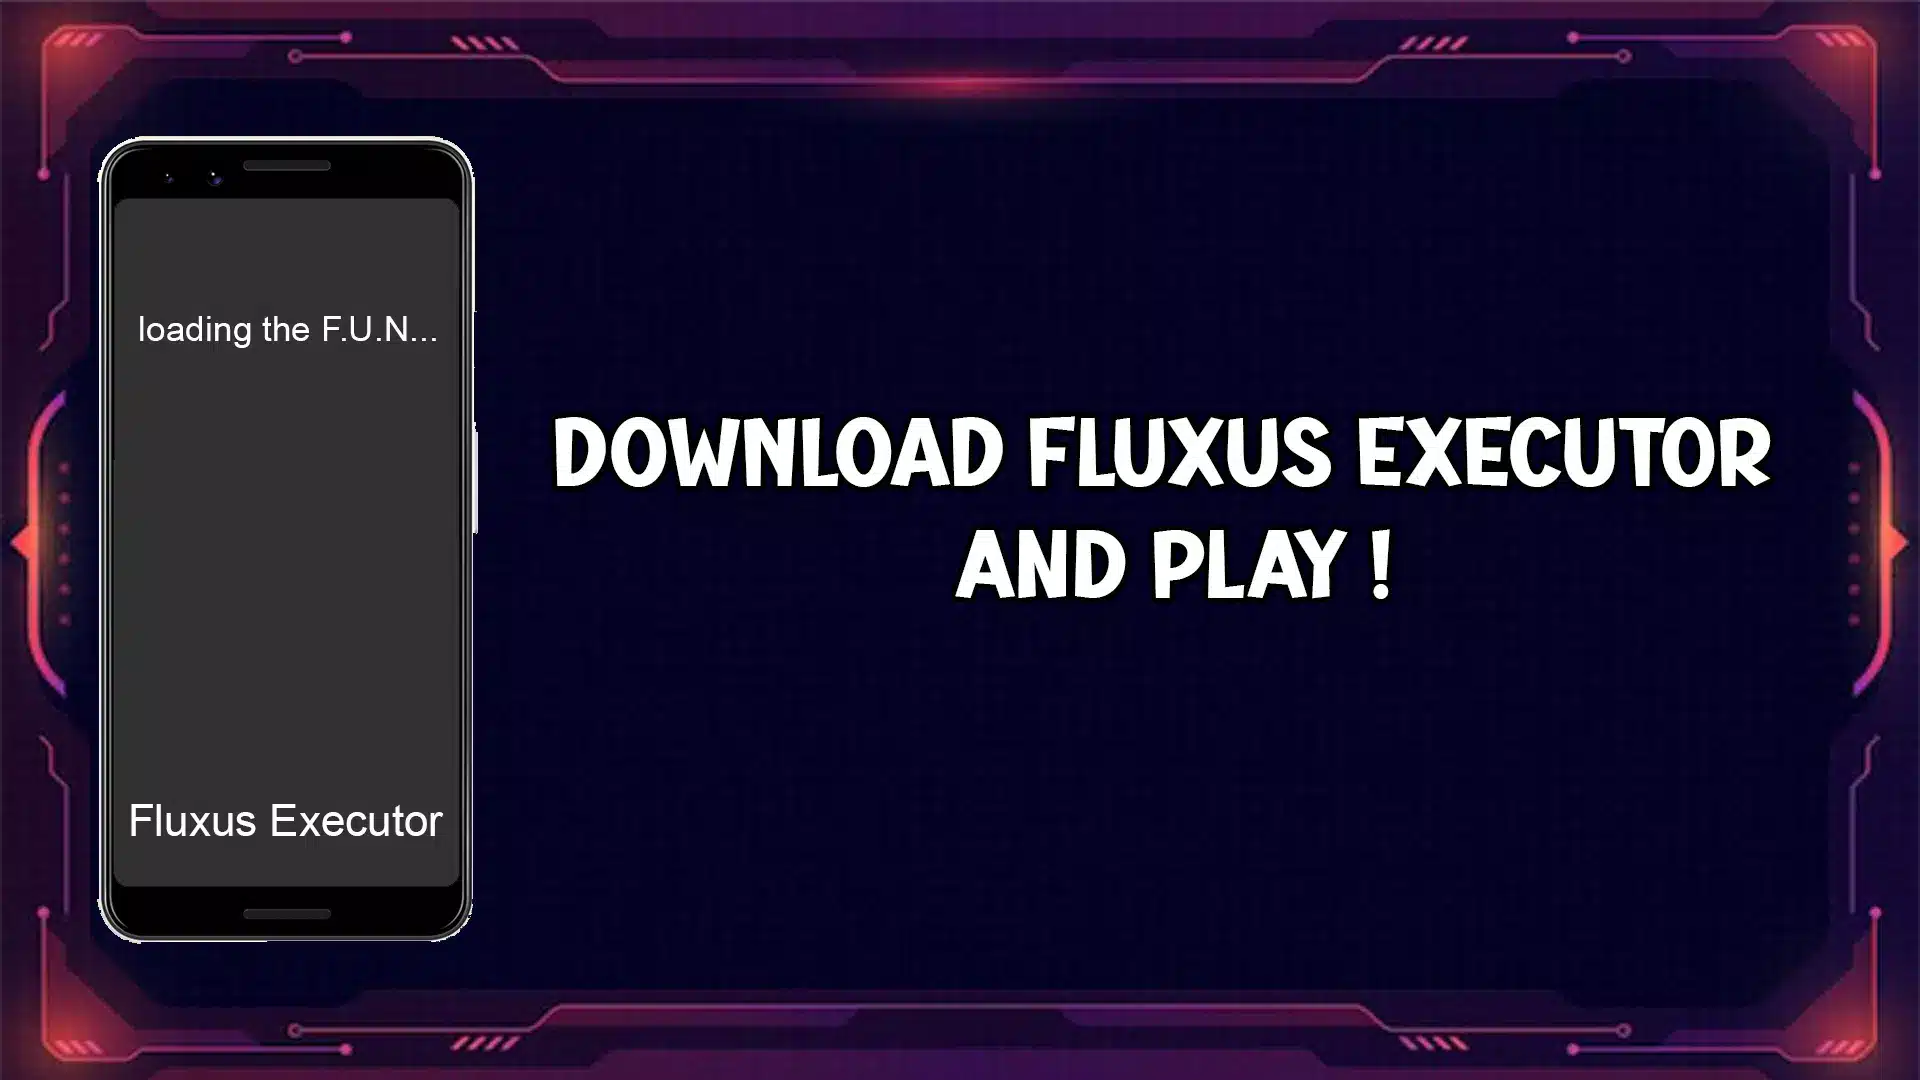 fluxus executor Image 4